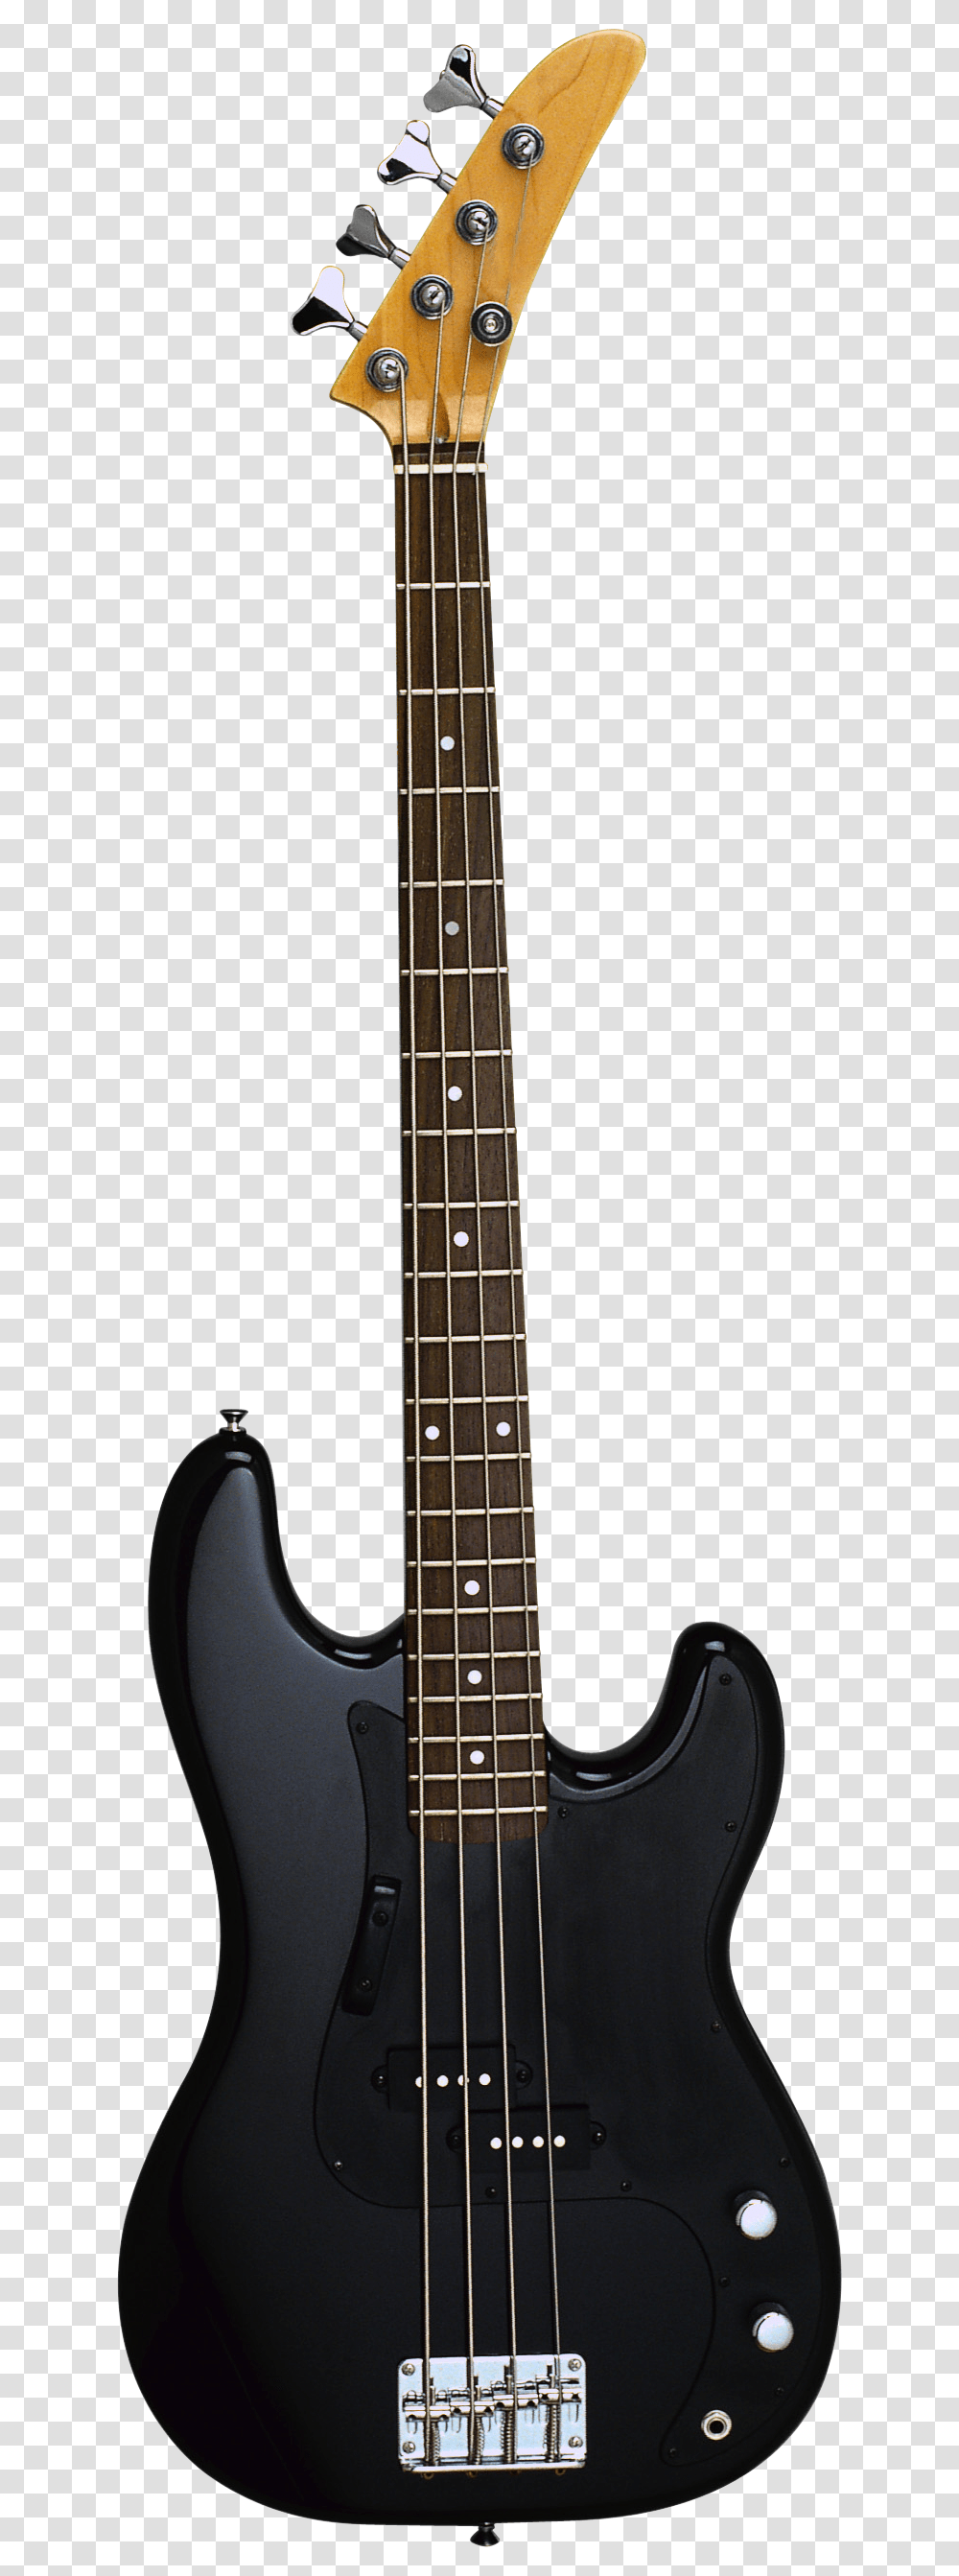 Black Electric Guitar Image Guitar For Picsart, Leisure Activities, Musical Instrument, Bass Guitar, Lute Transparent Png